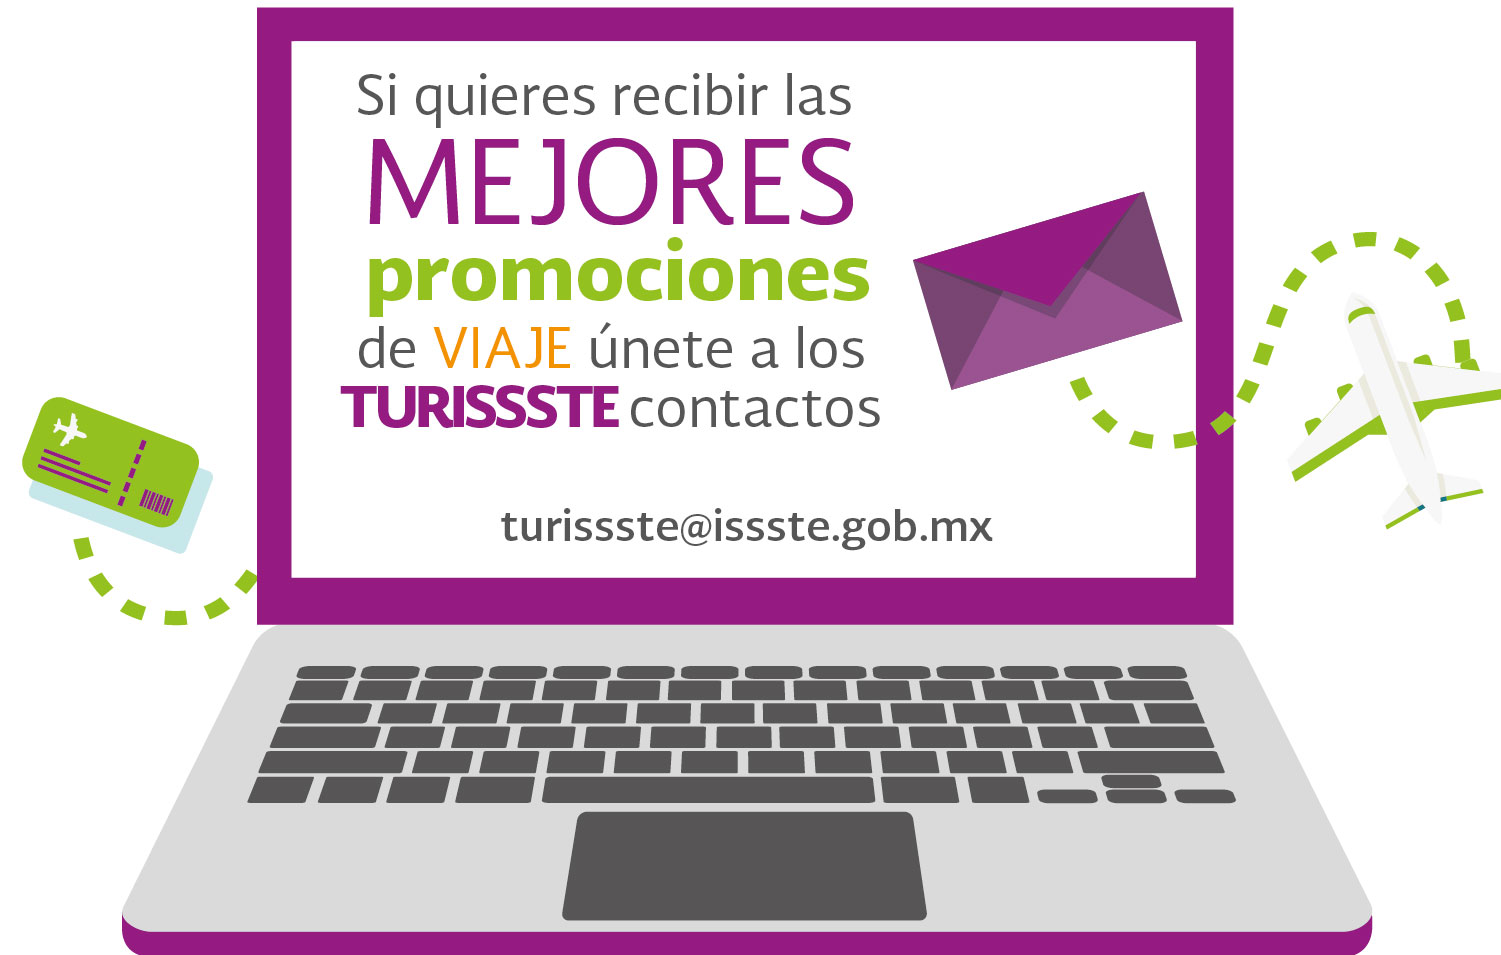 Se un TURISSSTE contacto escribe a turissste@issste.gob.mx